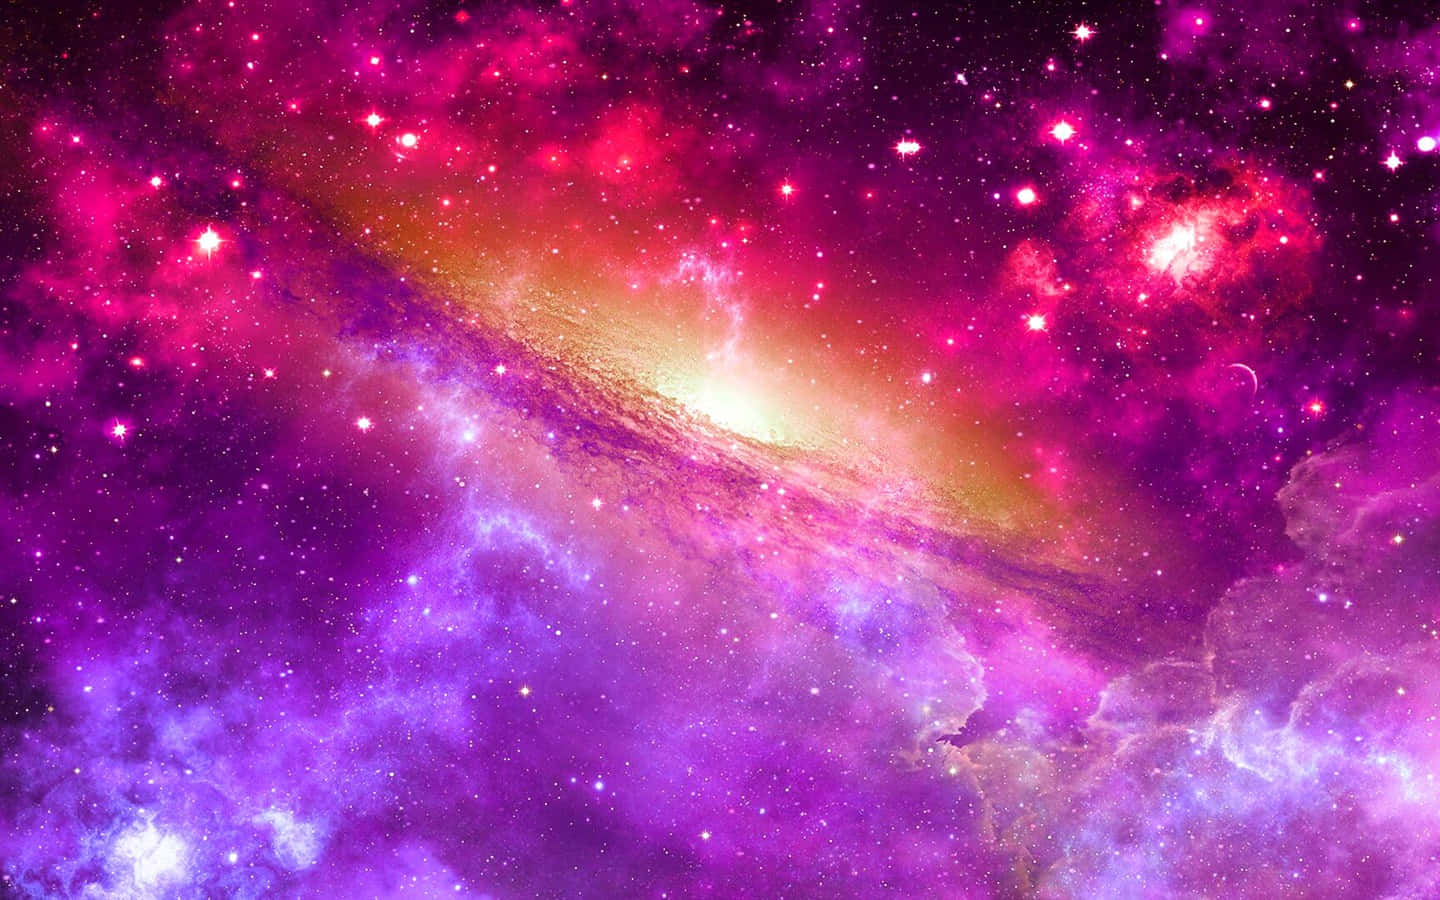 Enlivlig Blå Og Lilla Nebula På Nattehimlen.